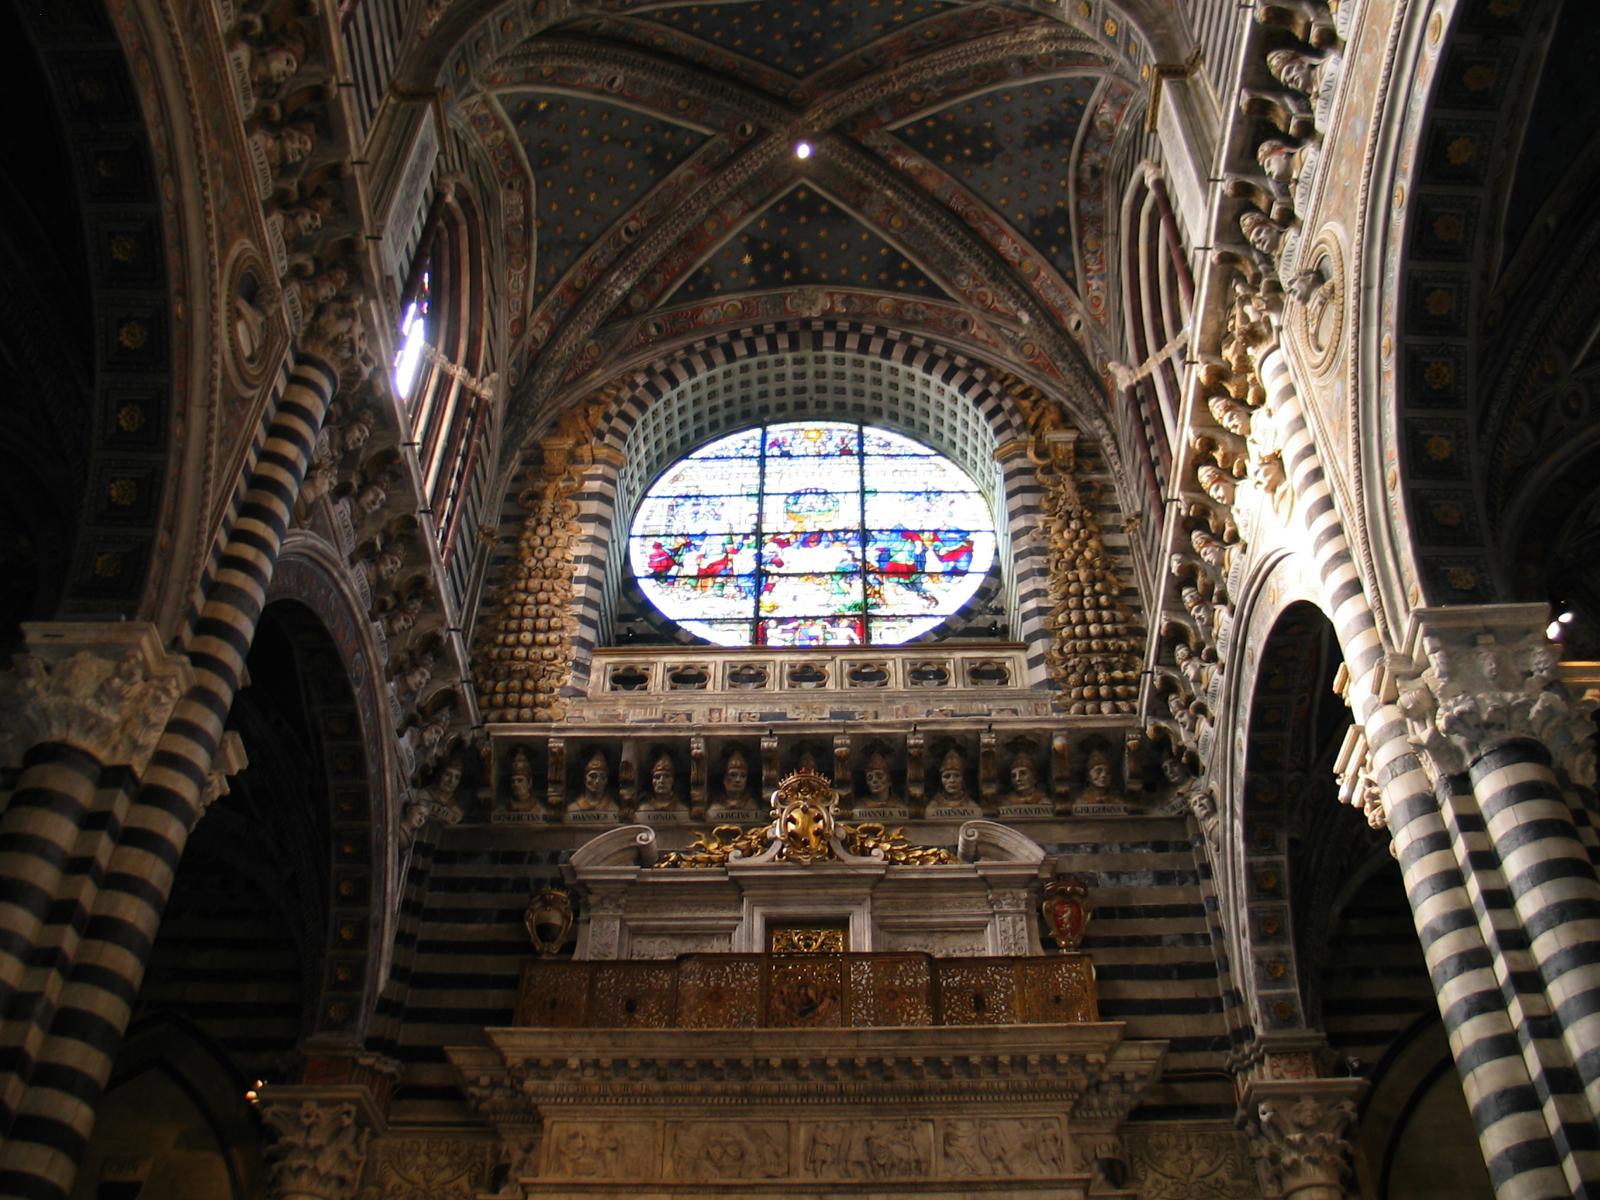 The Duomo's sanctuary